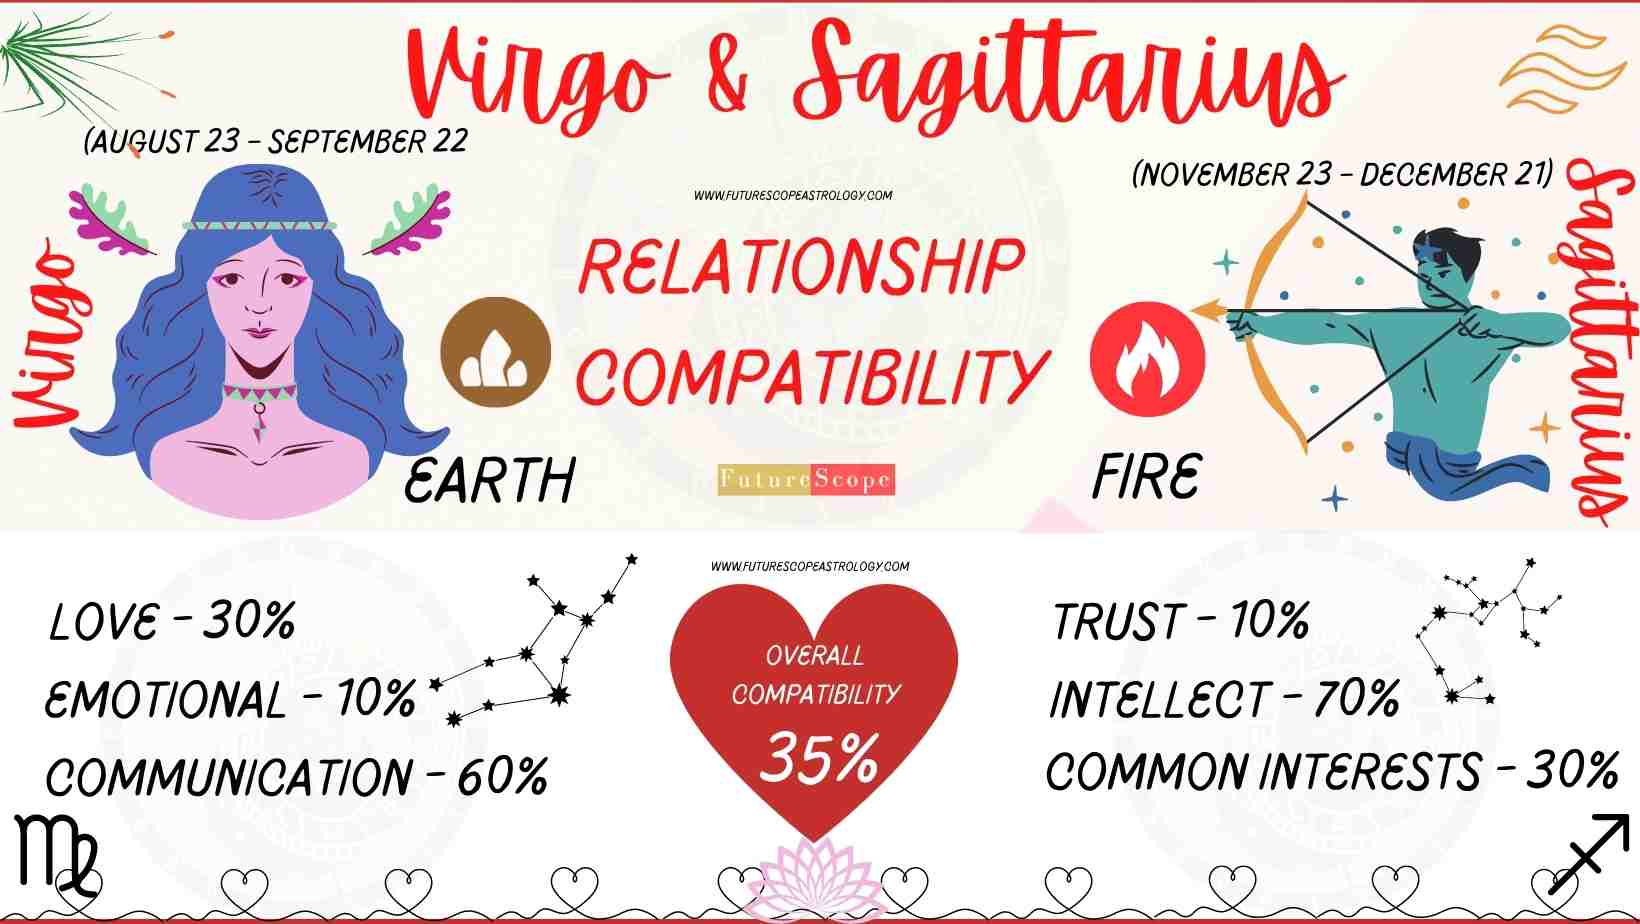 Virgo And Sagittarius Compatibility 10 1 